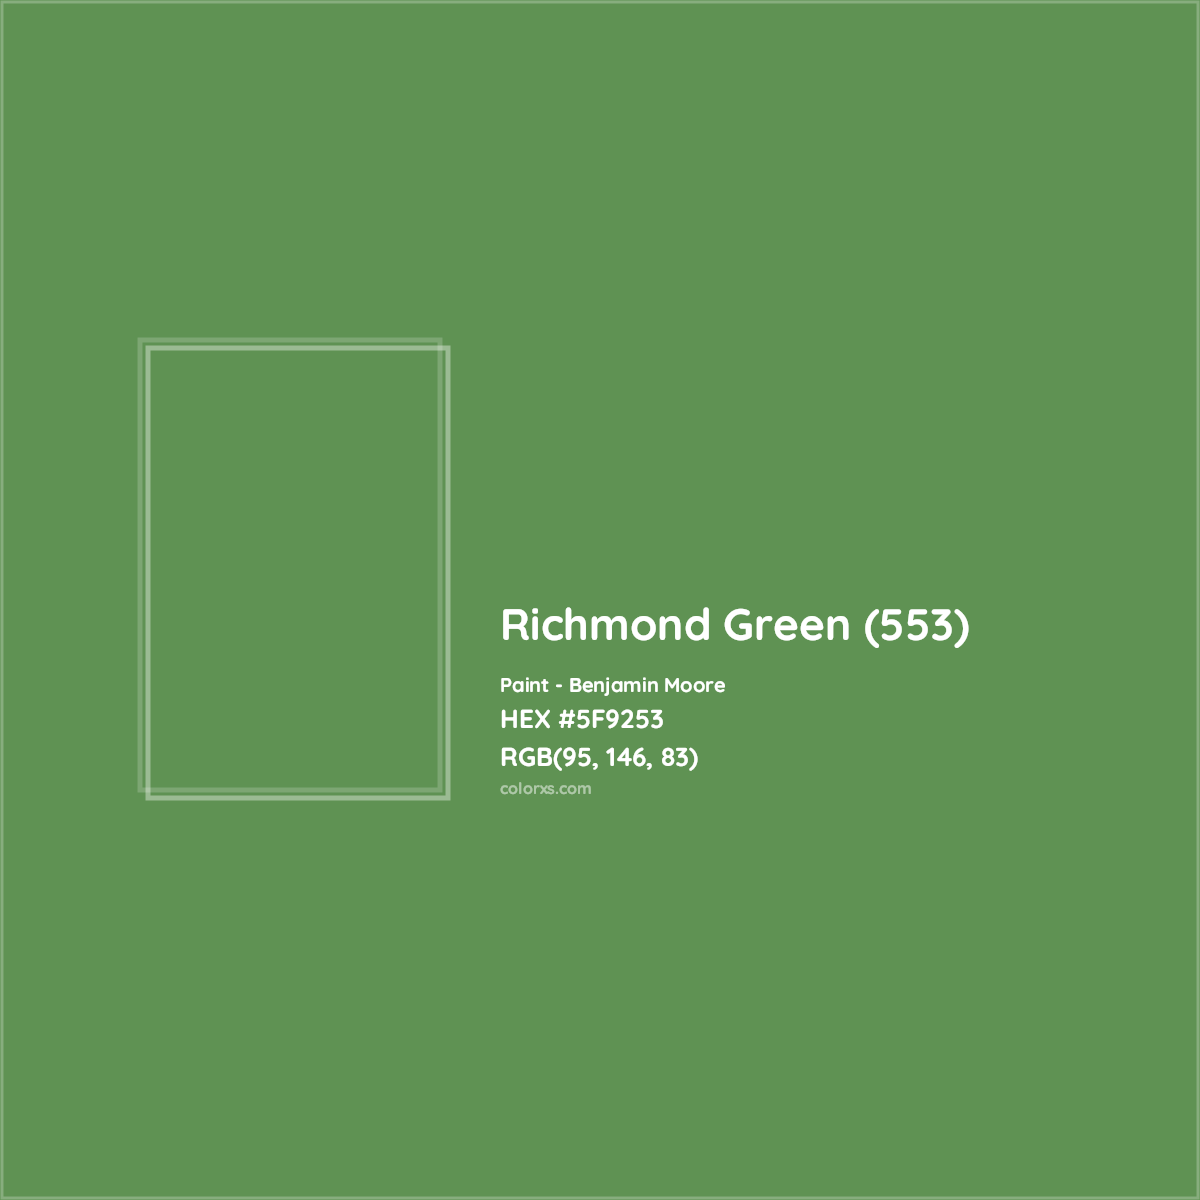 HEX #5F9253 Richmond Green (553) Paint Benjamin Moore - Color Code